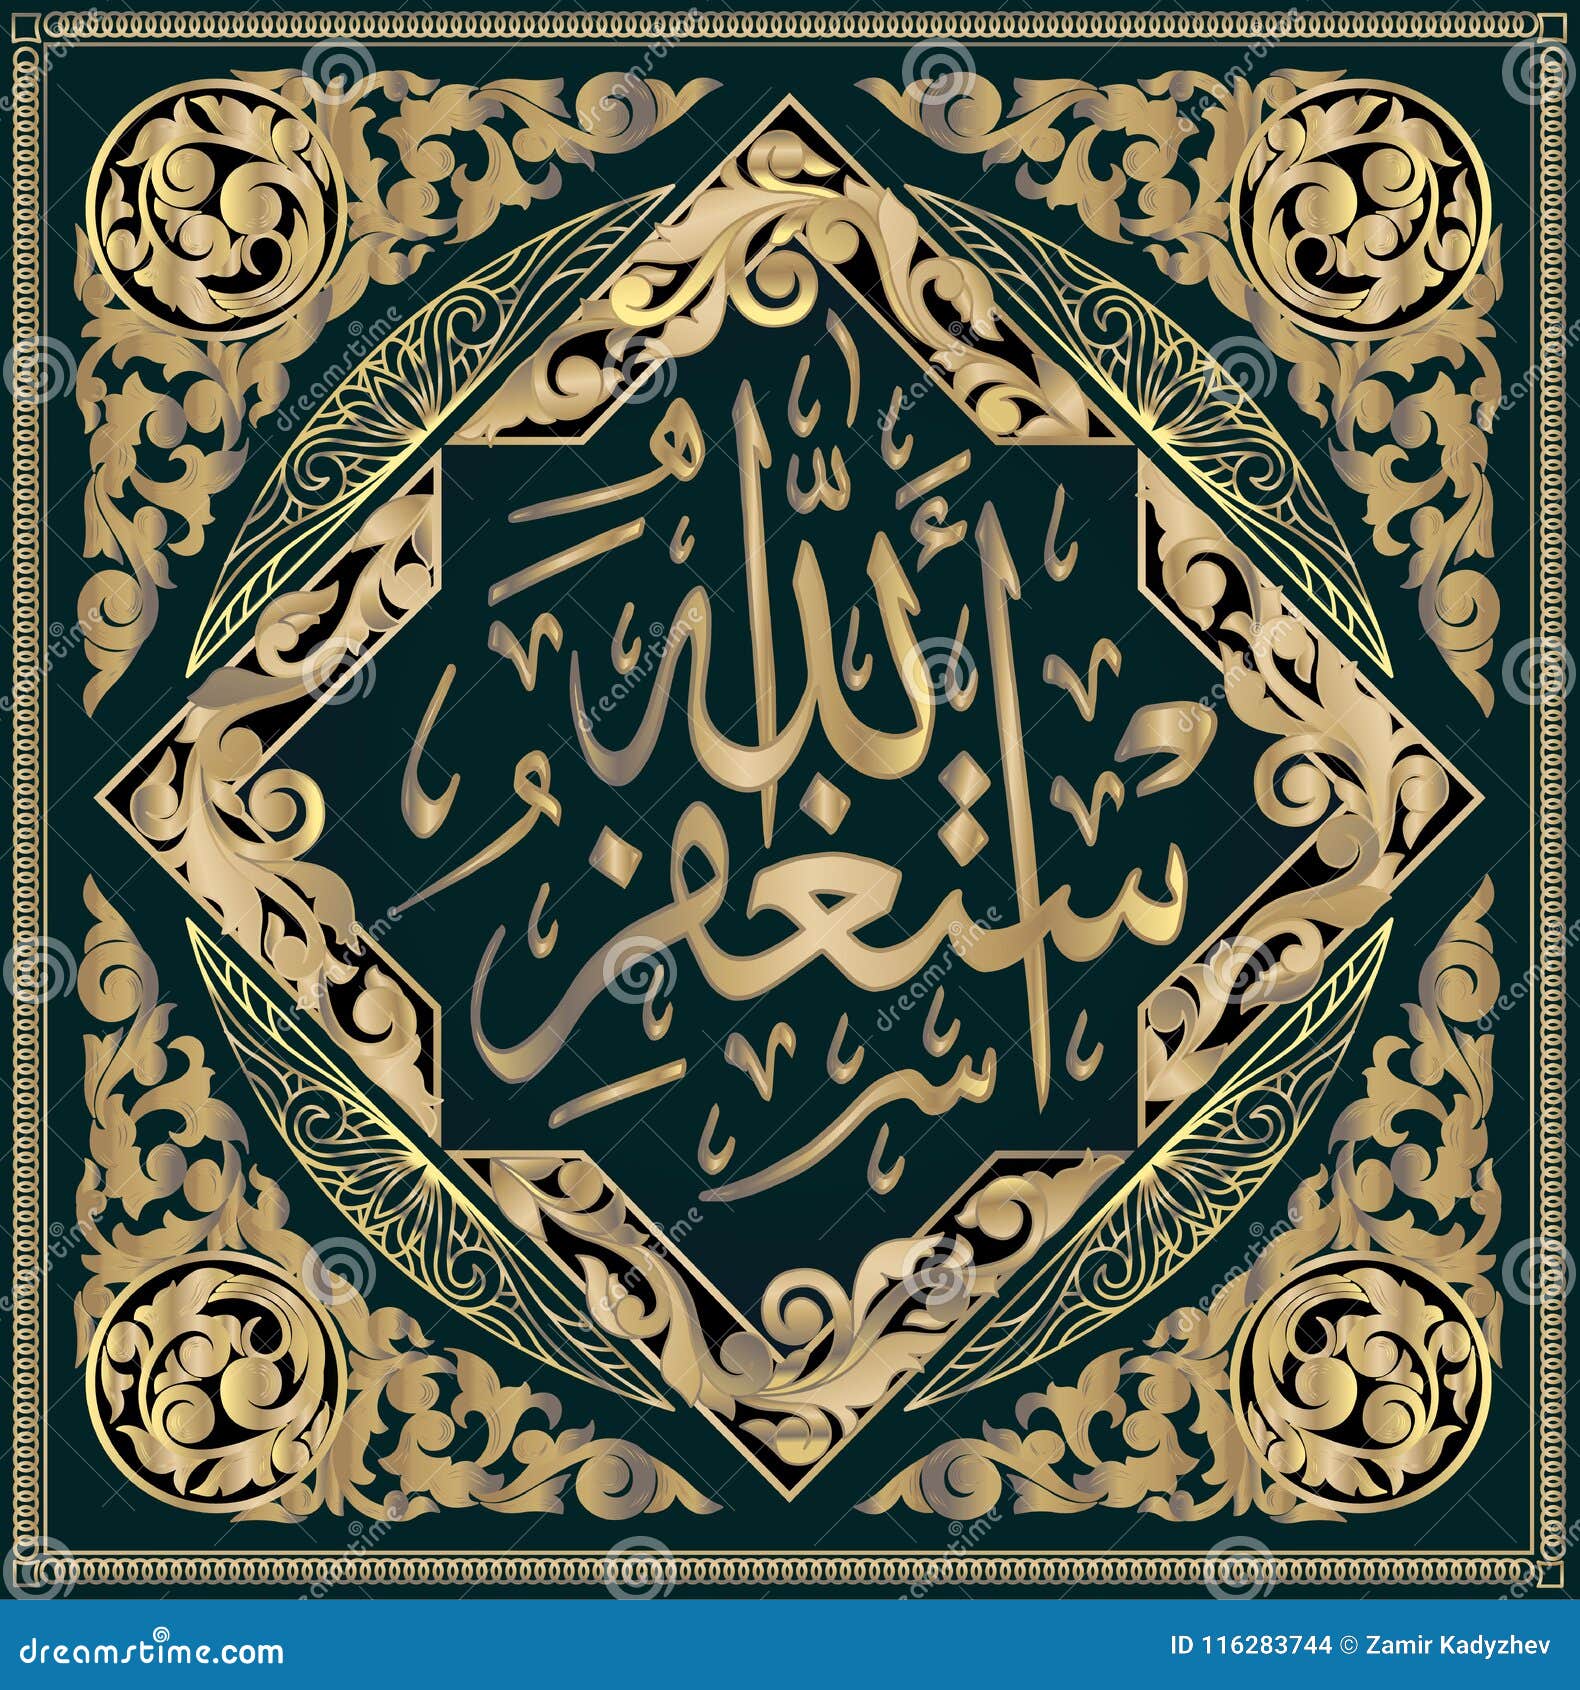 Islamic Calligraphy `Astaghfirullah` Draws Islamic Holidays. this ...